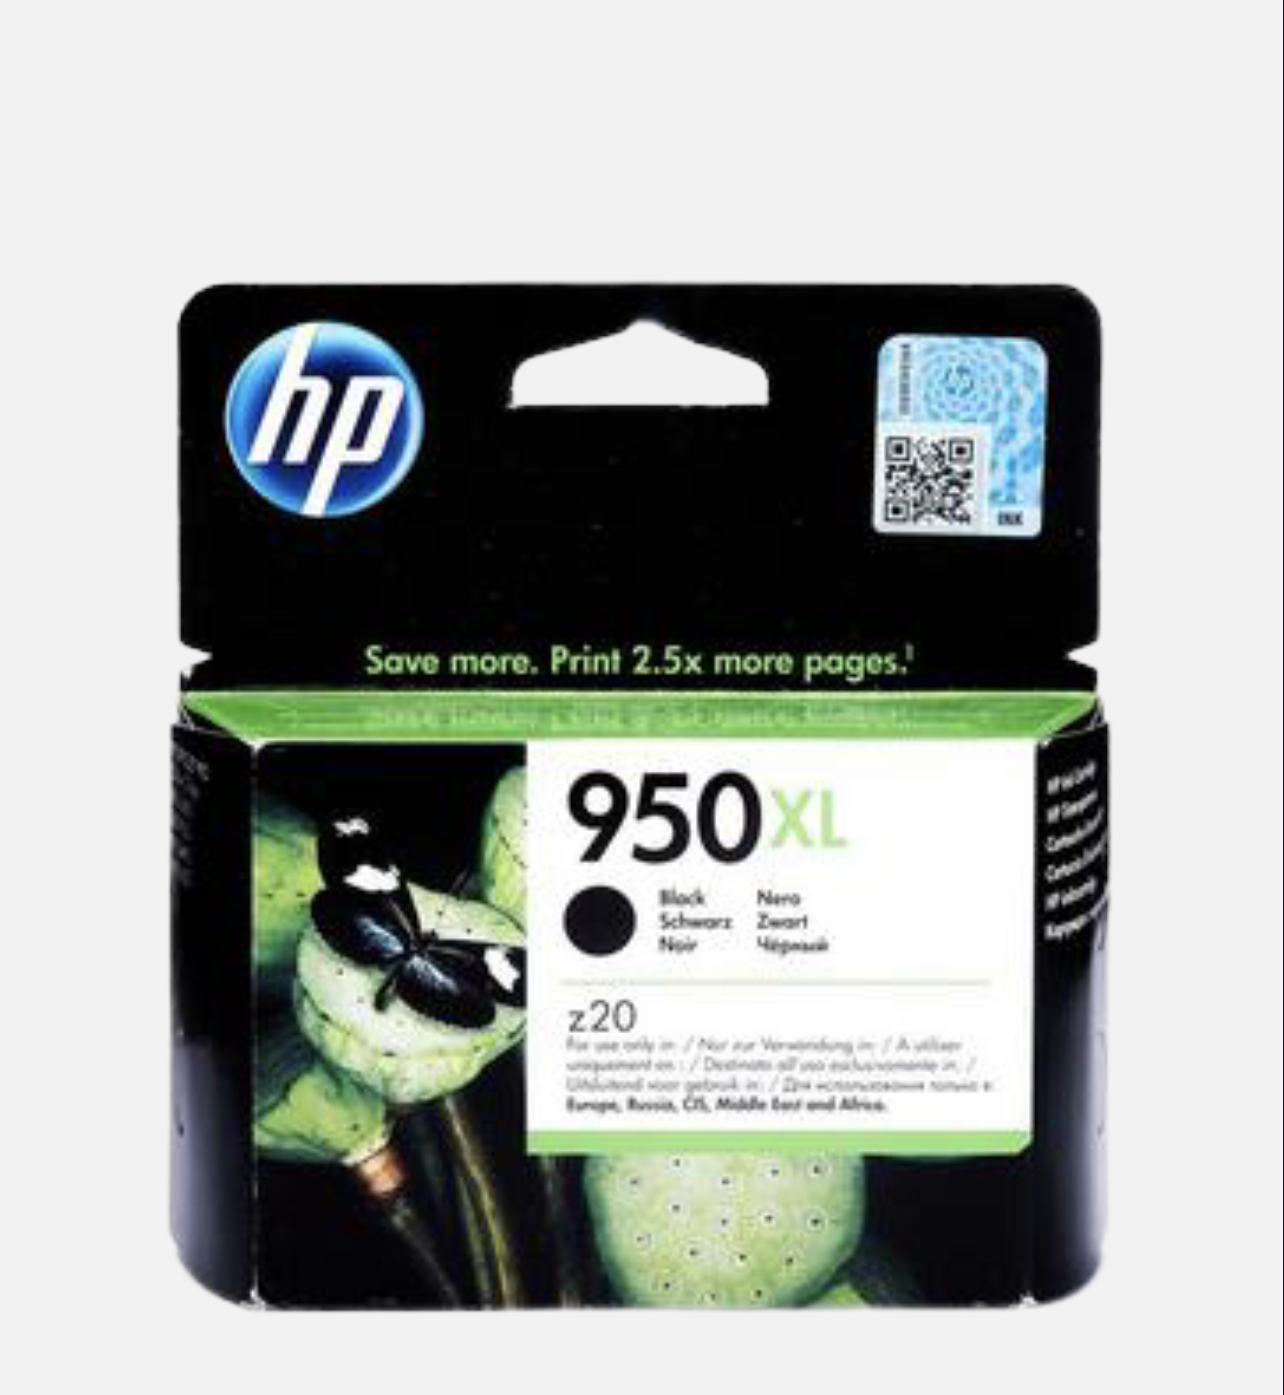 HP Ink - 950 Xl